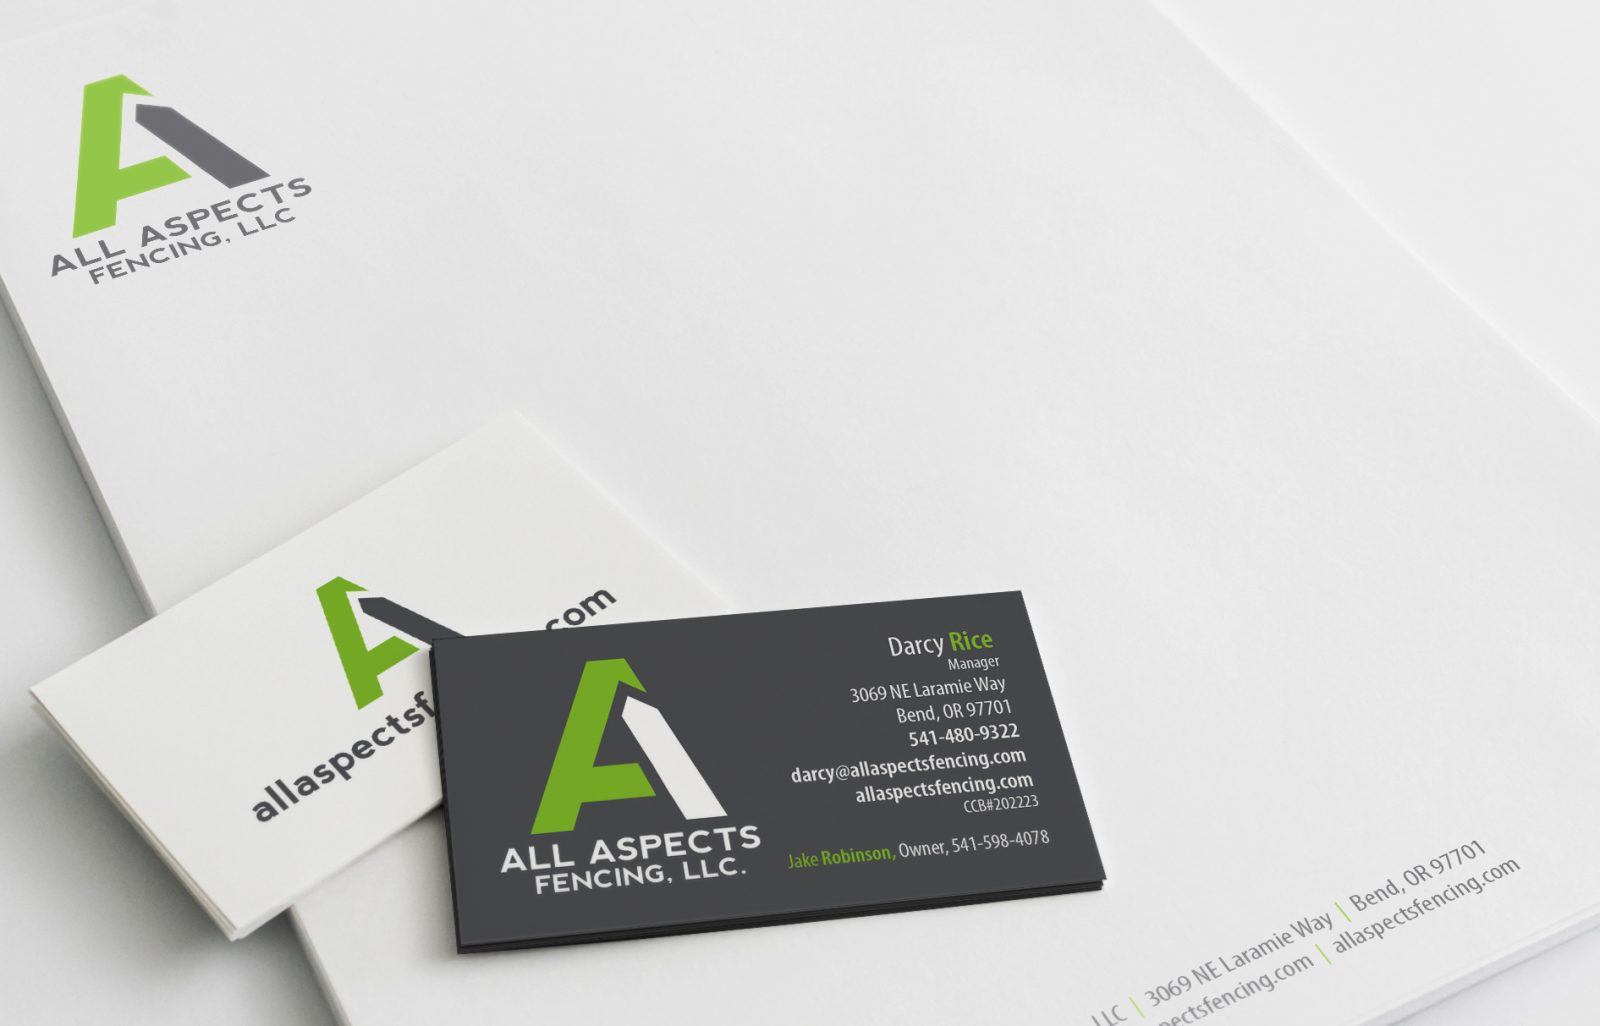 aaf-letterhead-business-cards-close-up-3